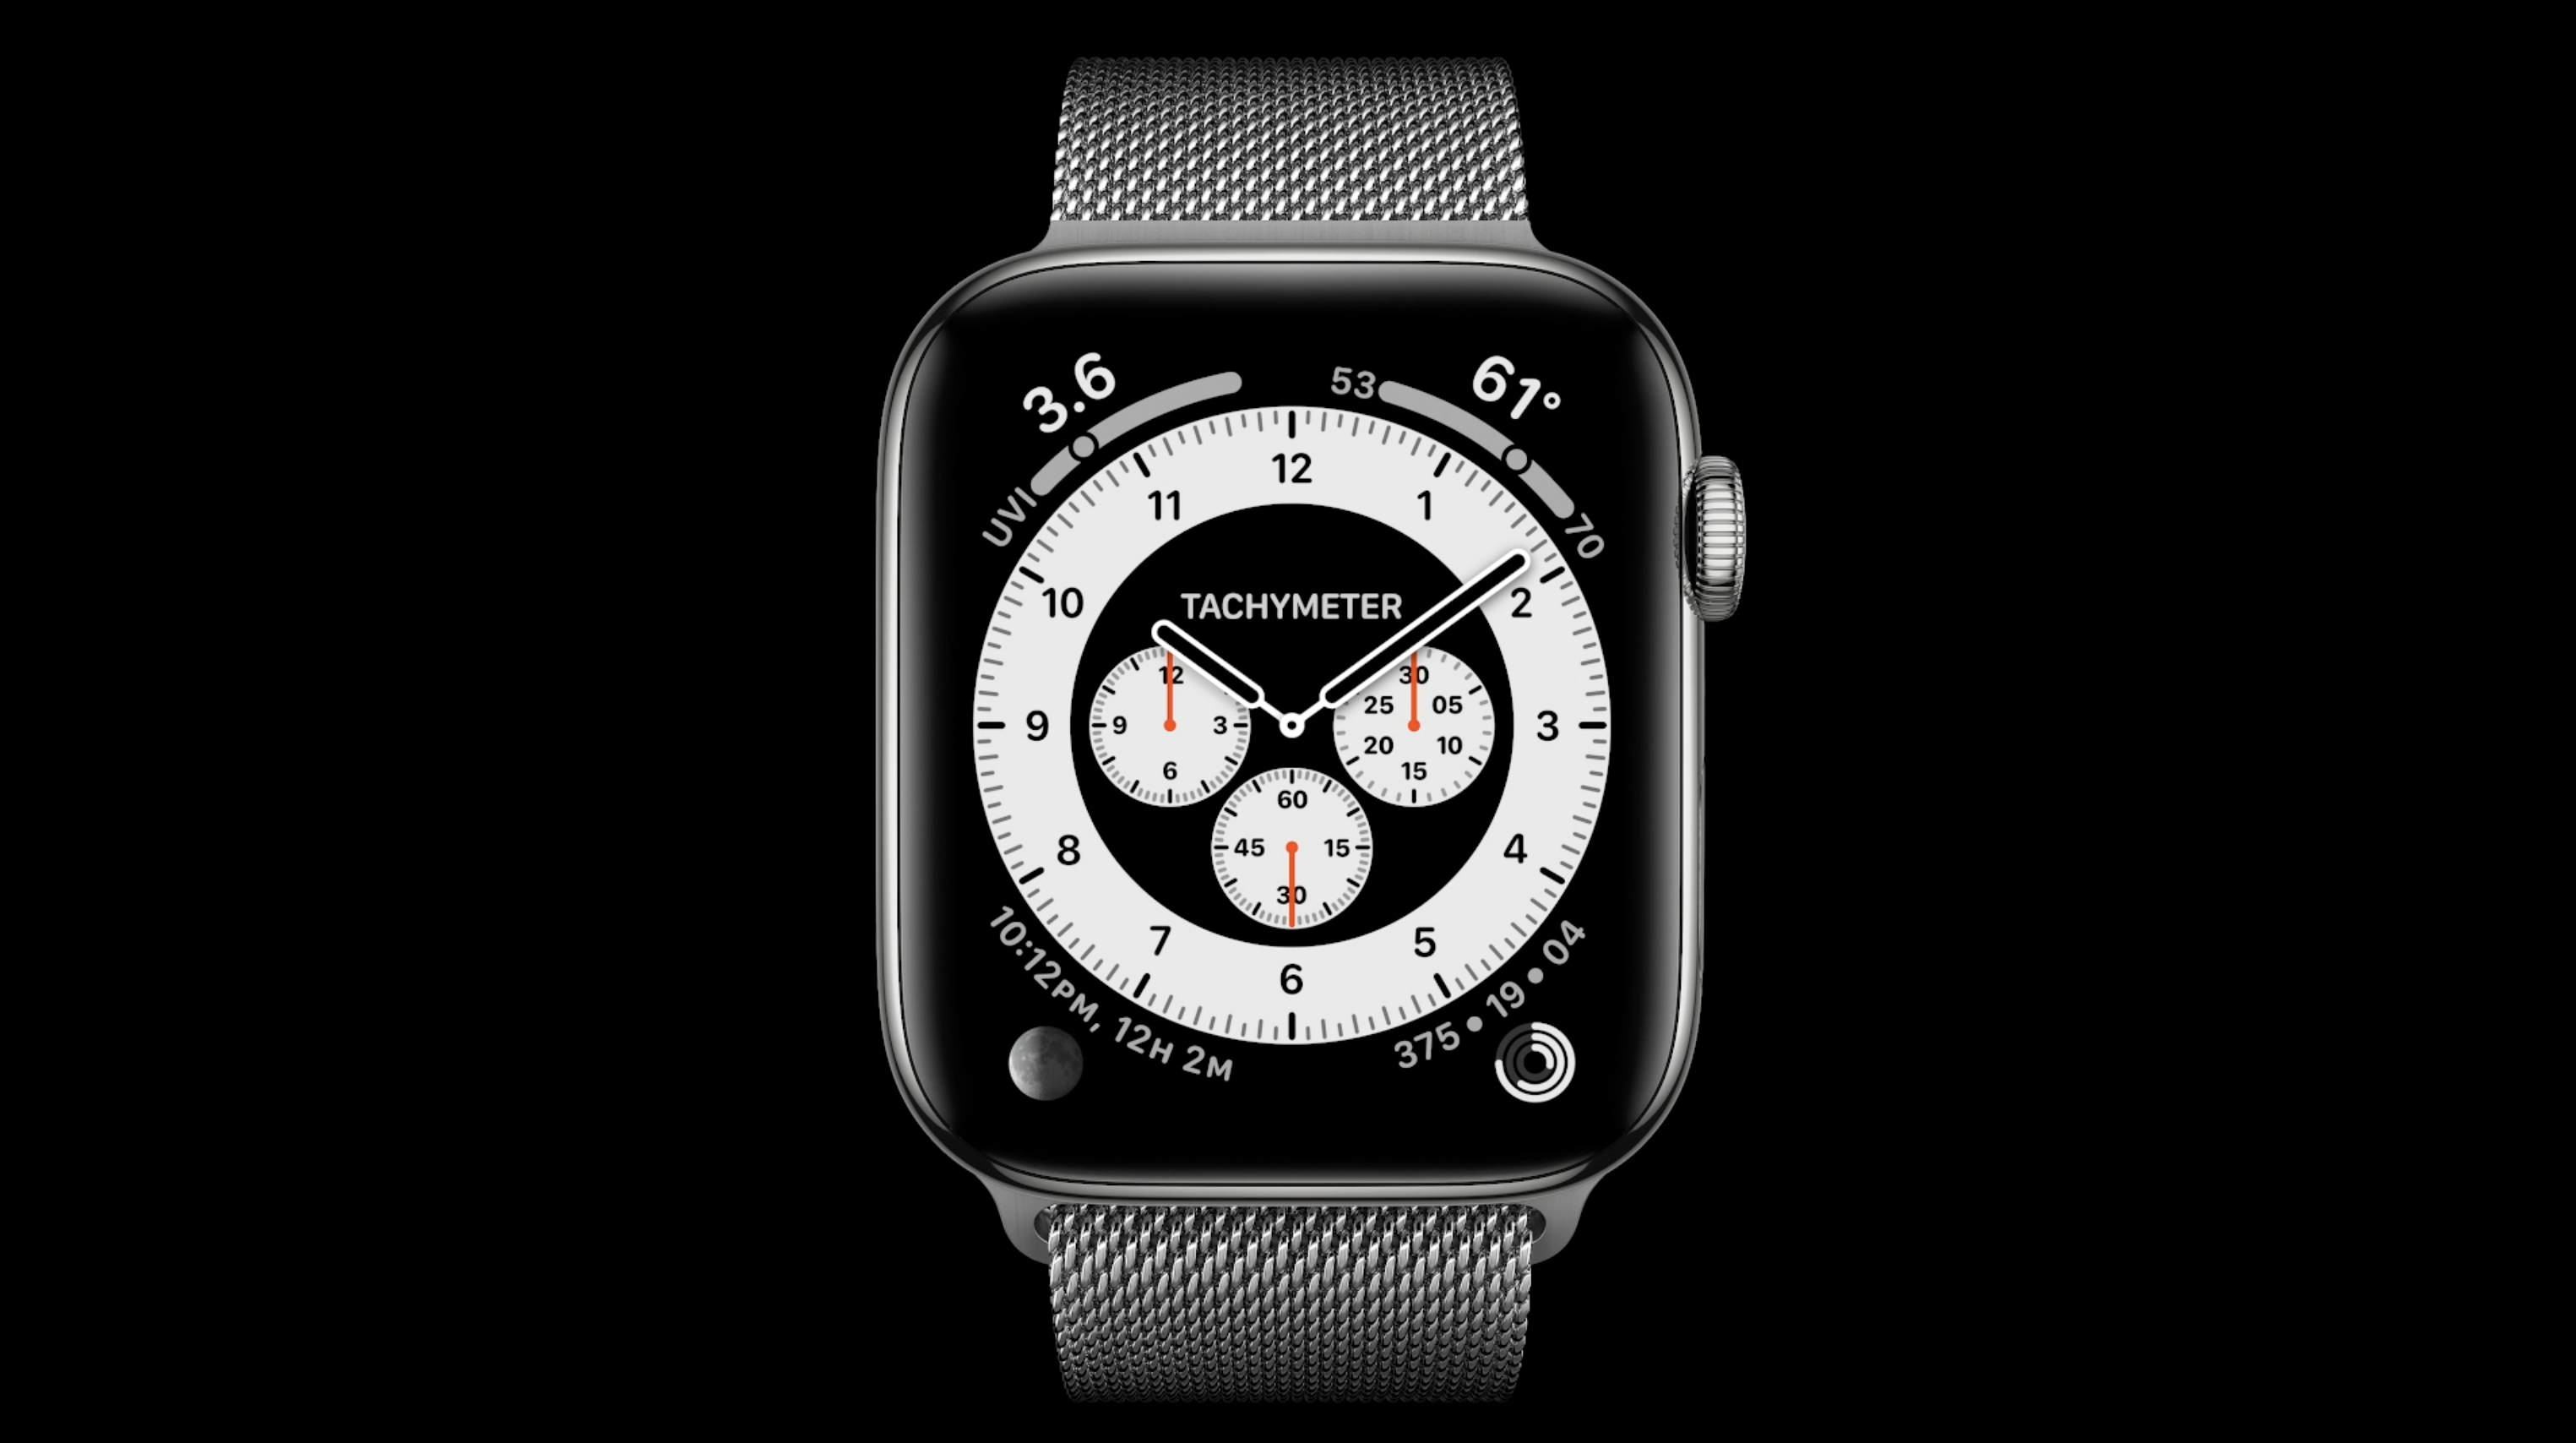 When will Apple release watchOS 7 for Apple Watch? 9to5Mac